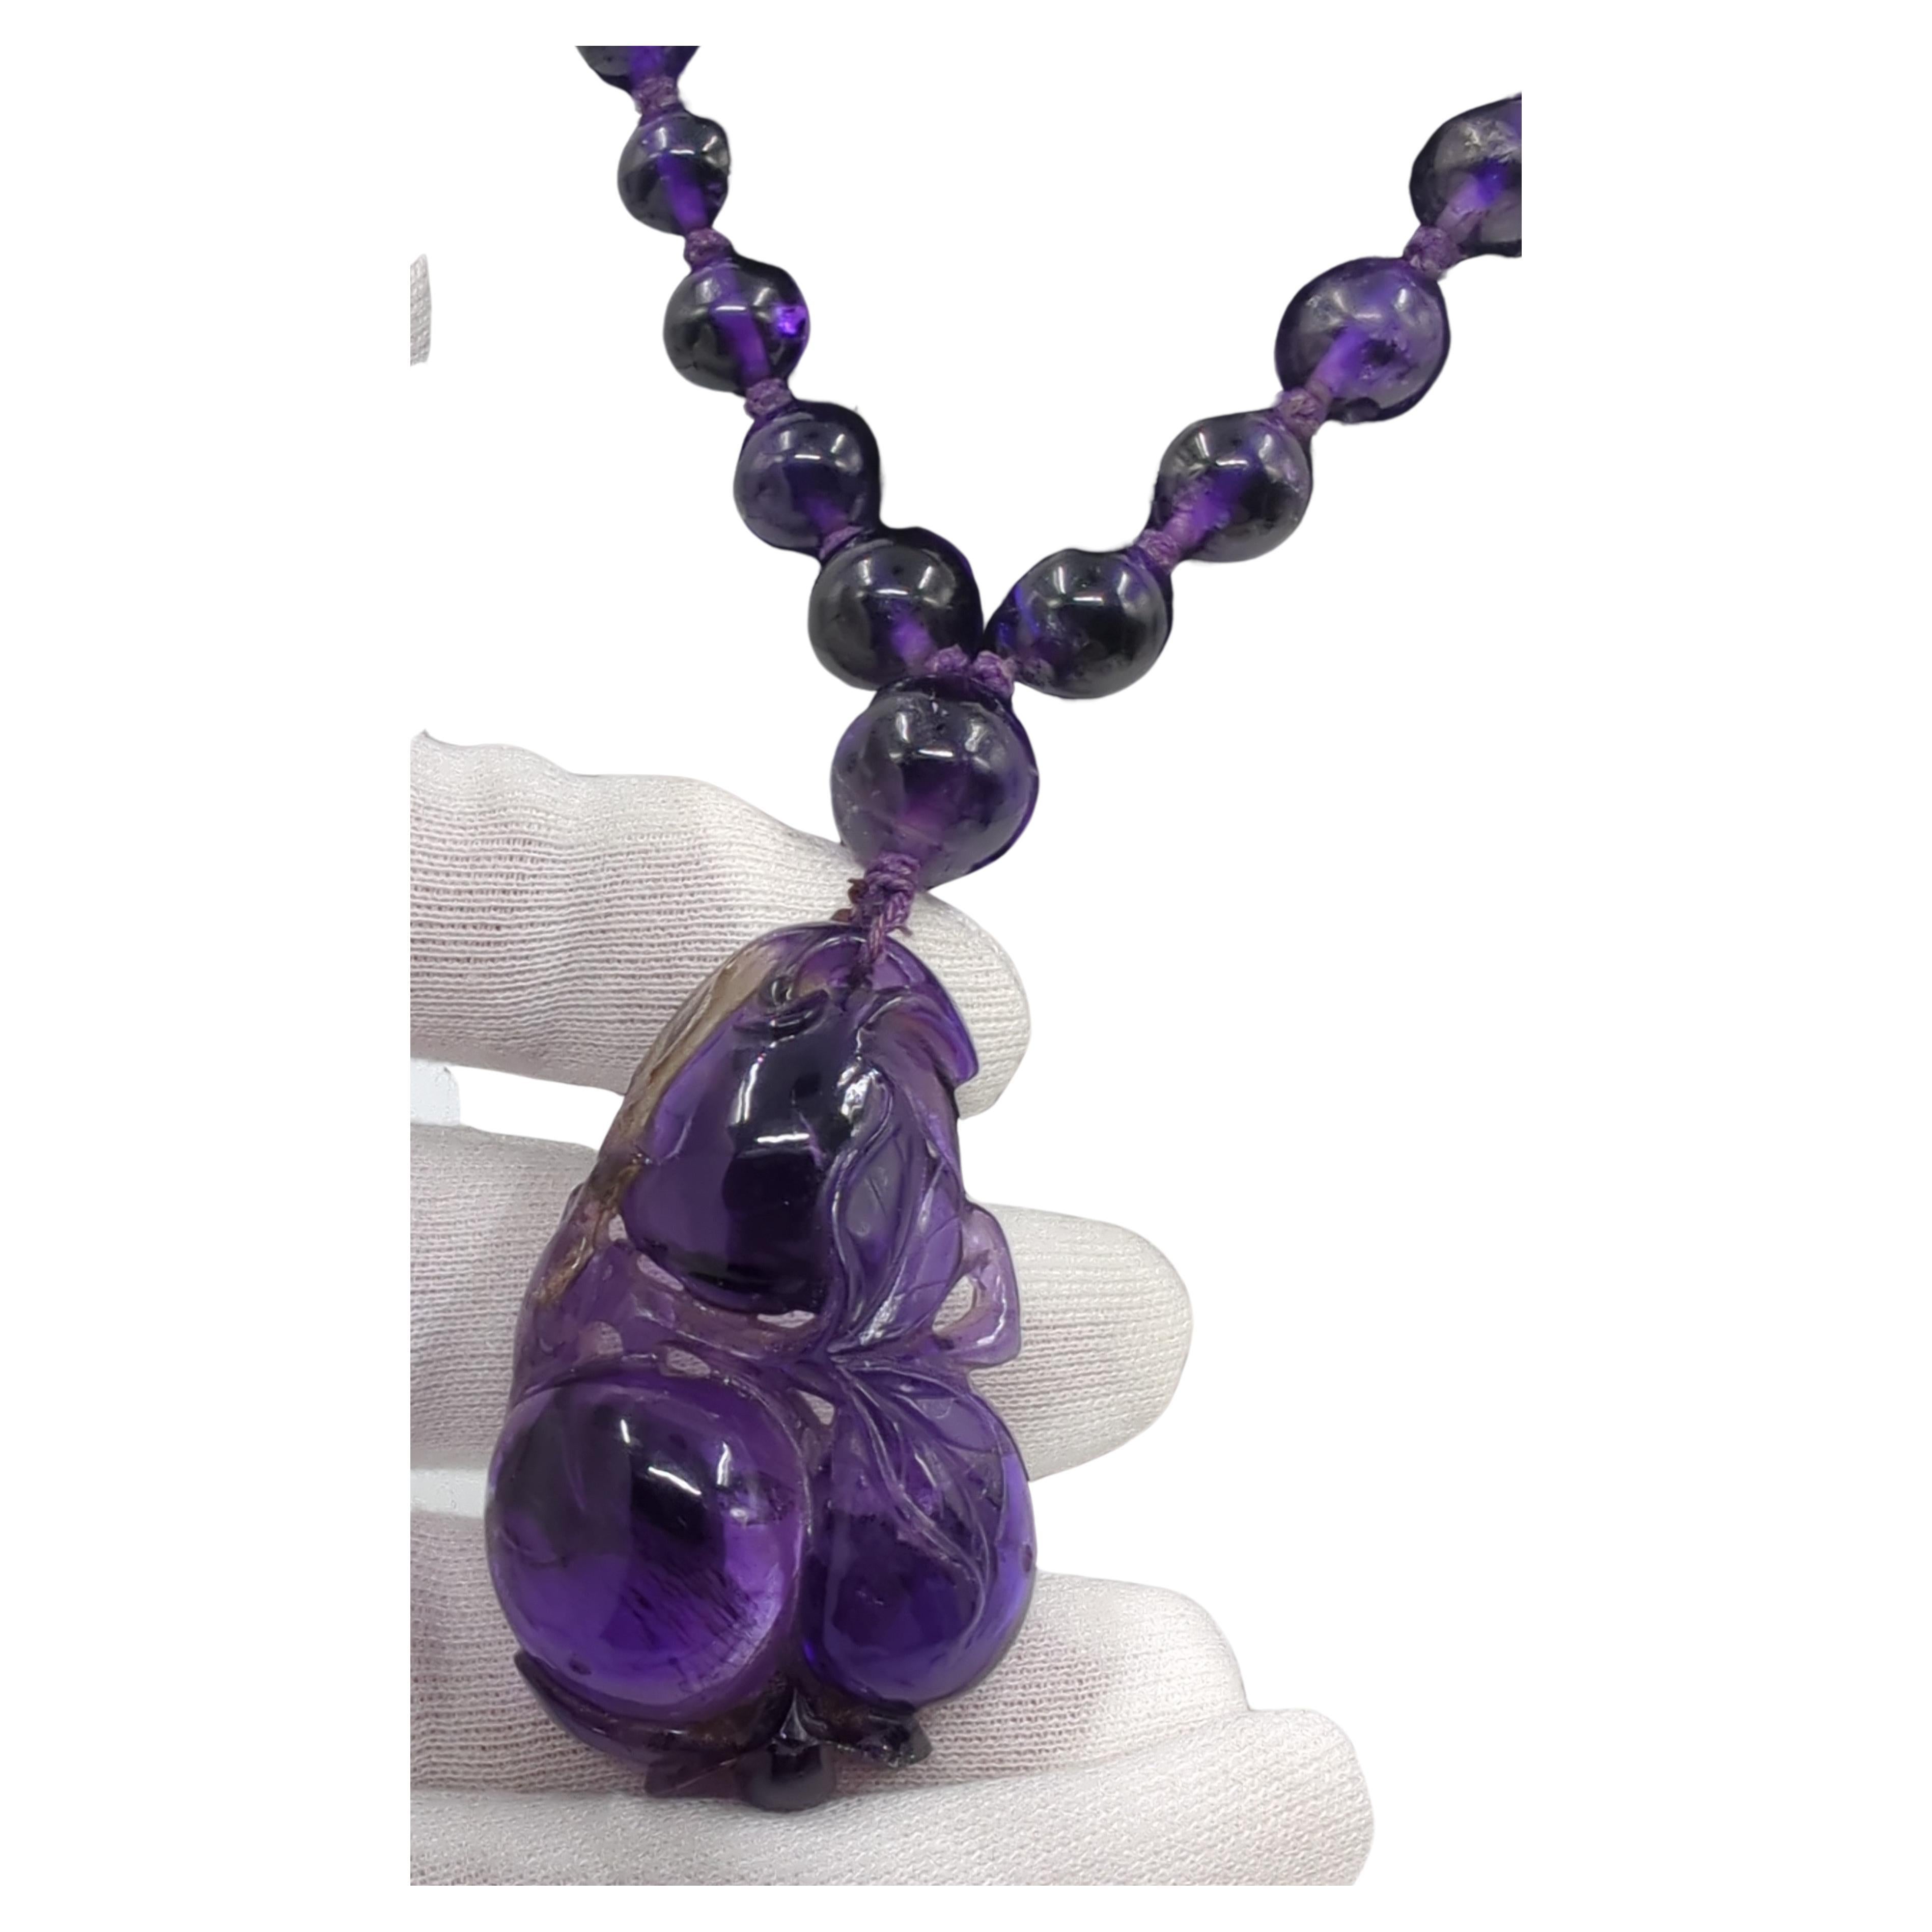 Antique Chinese Intense Purple Amethyst Pendant Graduating Beaded Necklace 24